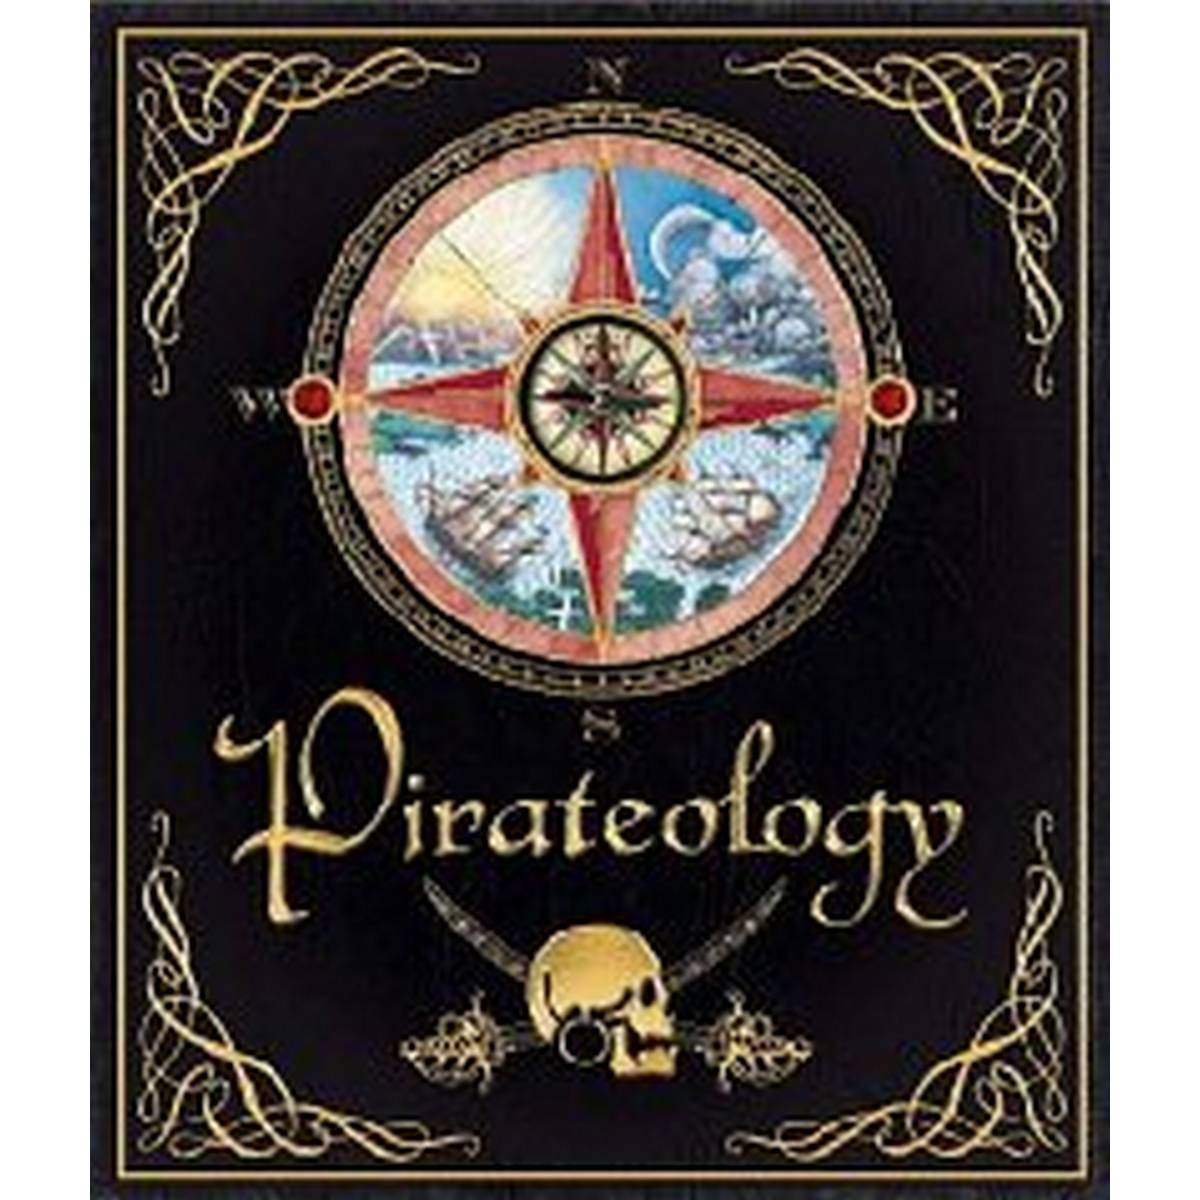 Pirateology (Ology Series)